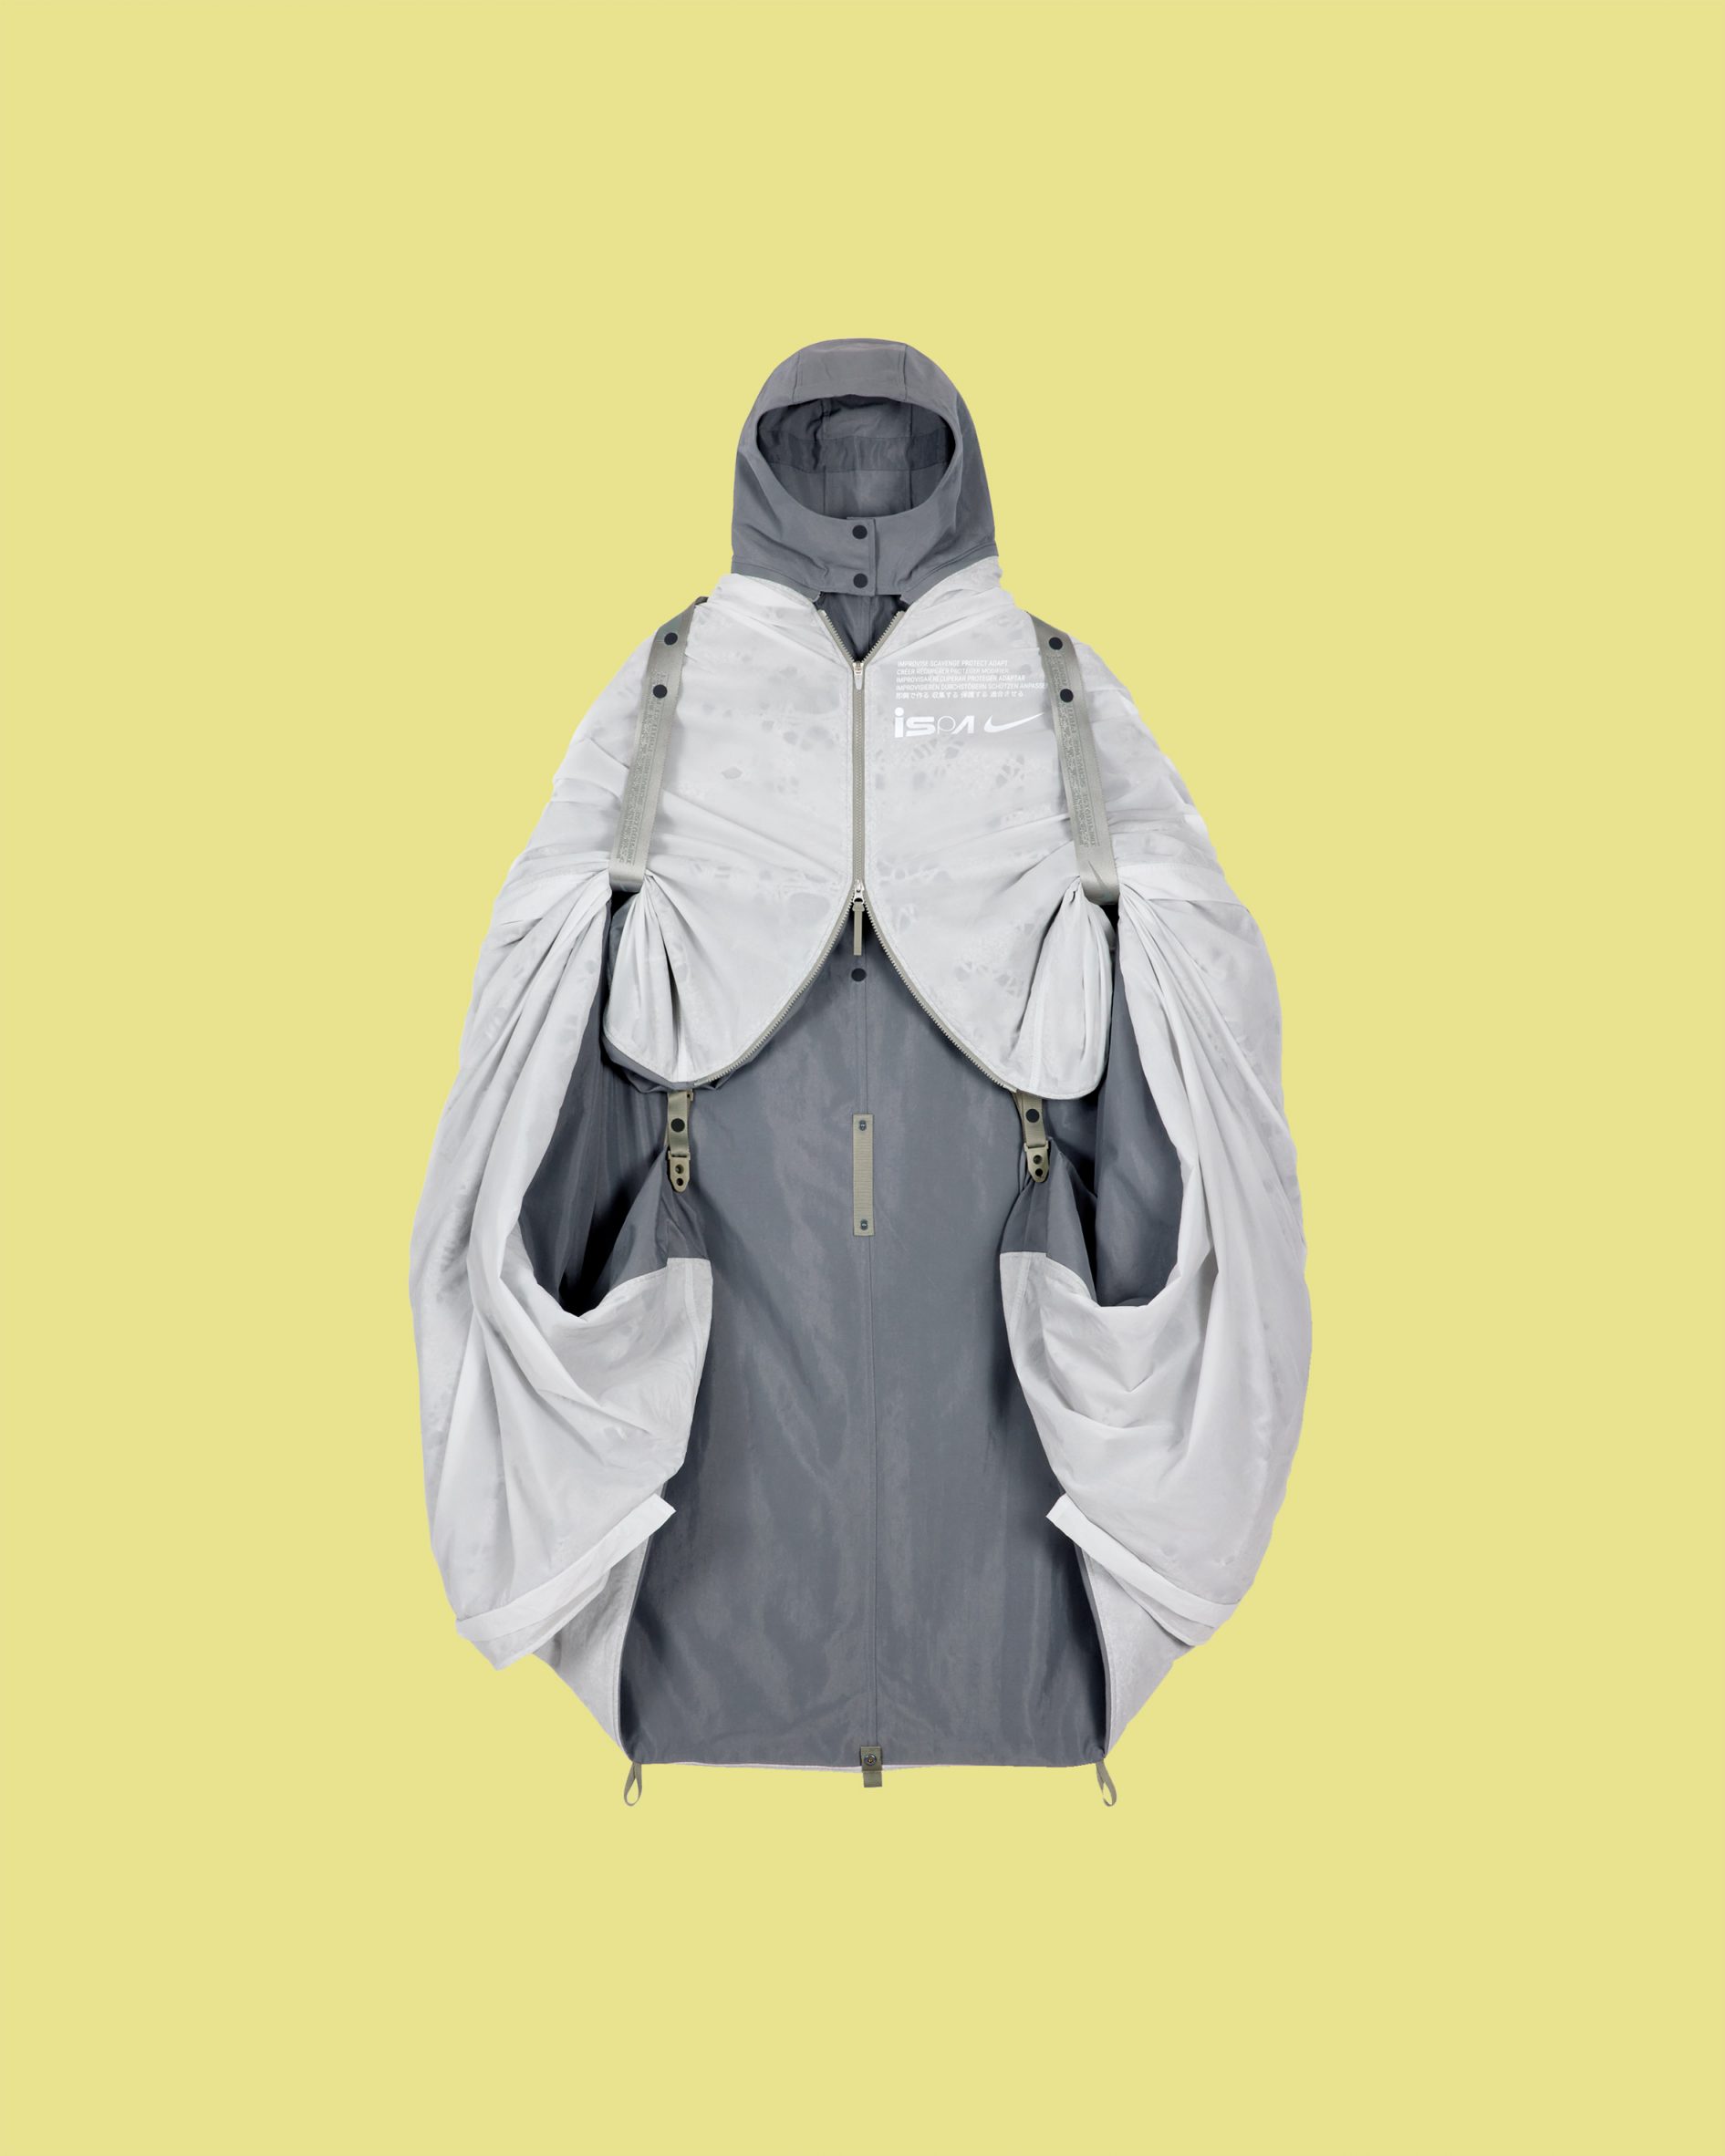 Multifunctional raincoat by Nike